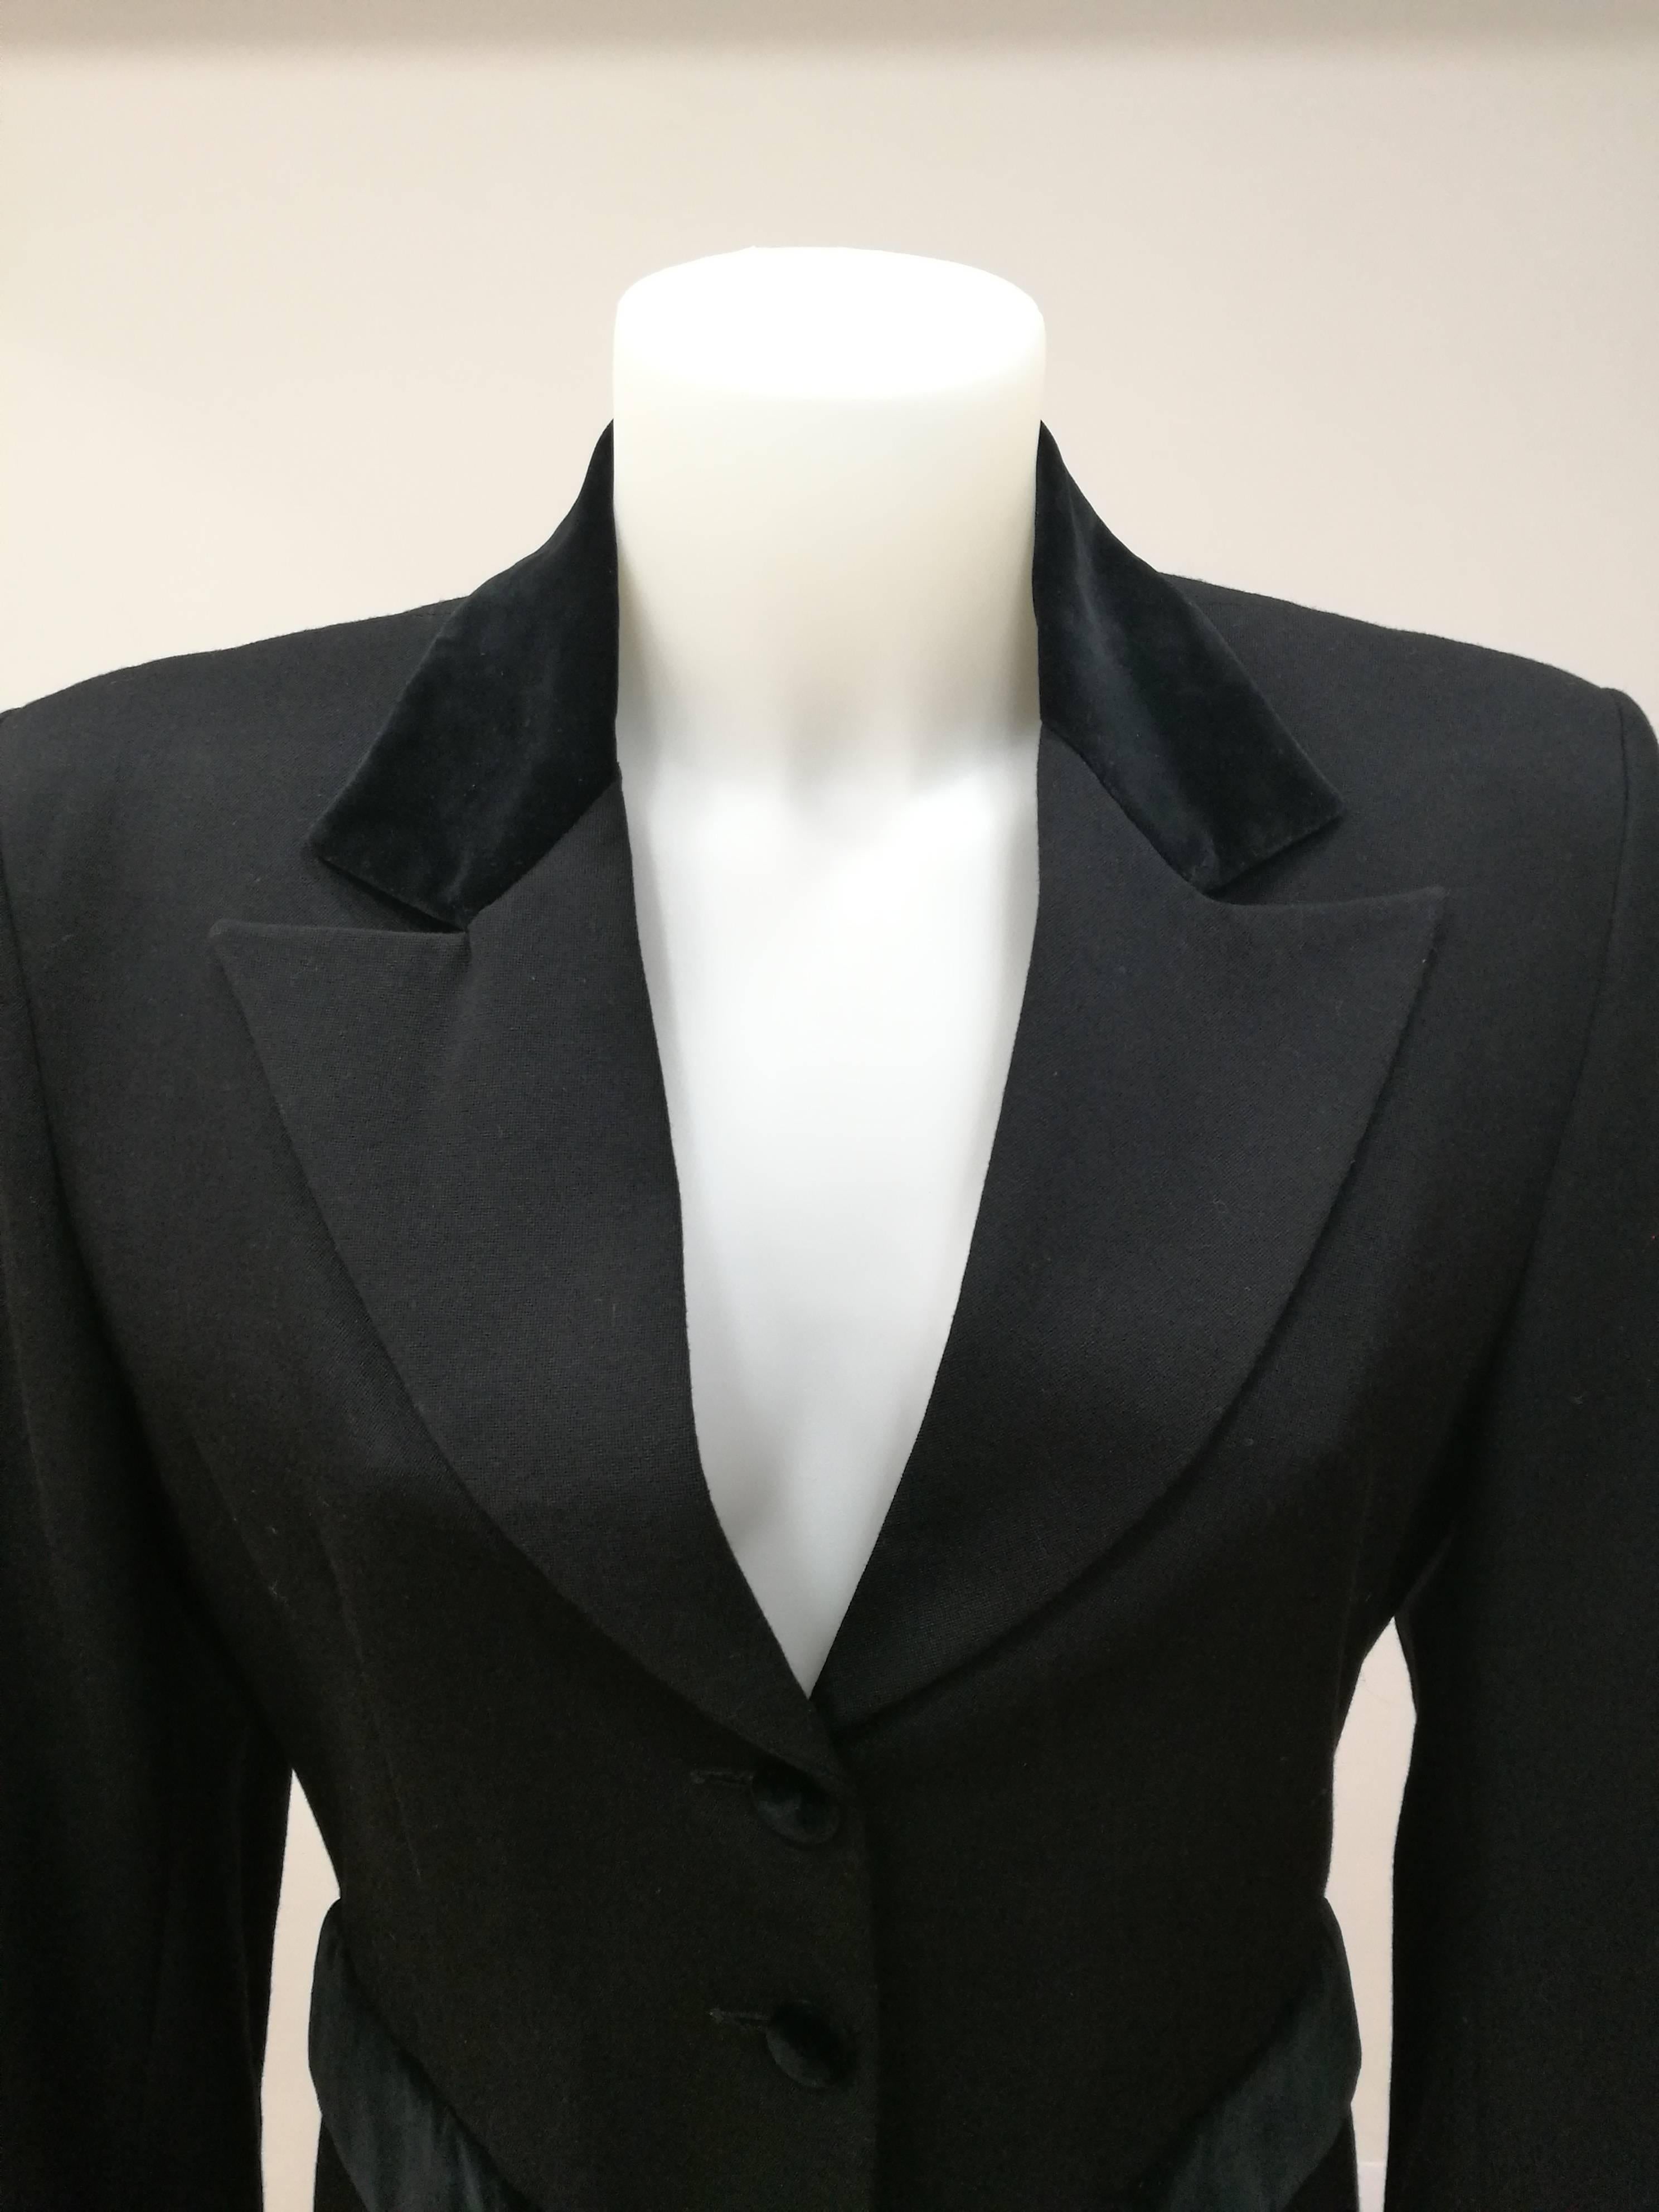 Vintage Oliver by Valentino Black Jacket
Vintage jacket by Valentino totally made in italy in standard size range m
Composition: 100% wool
lining 100% viscose